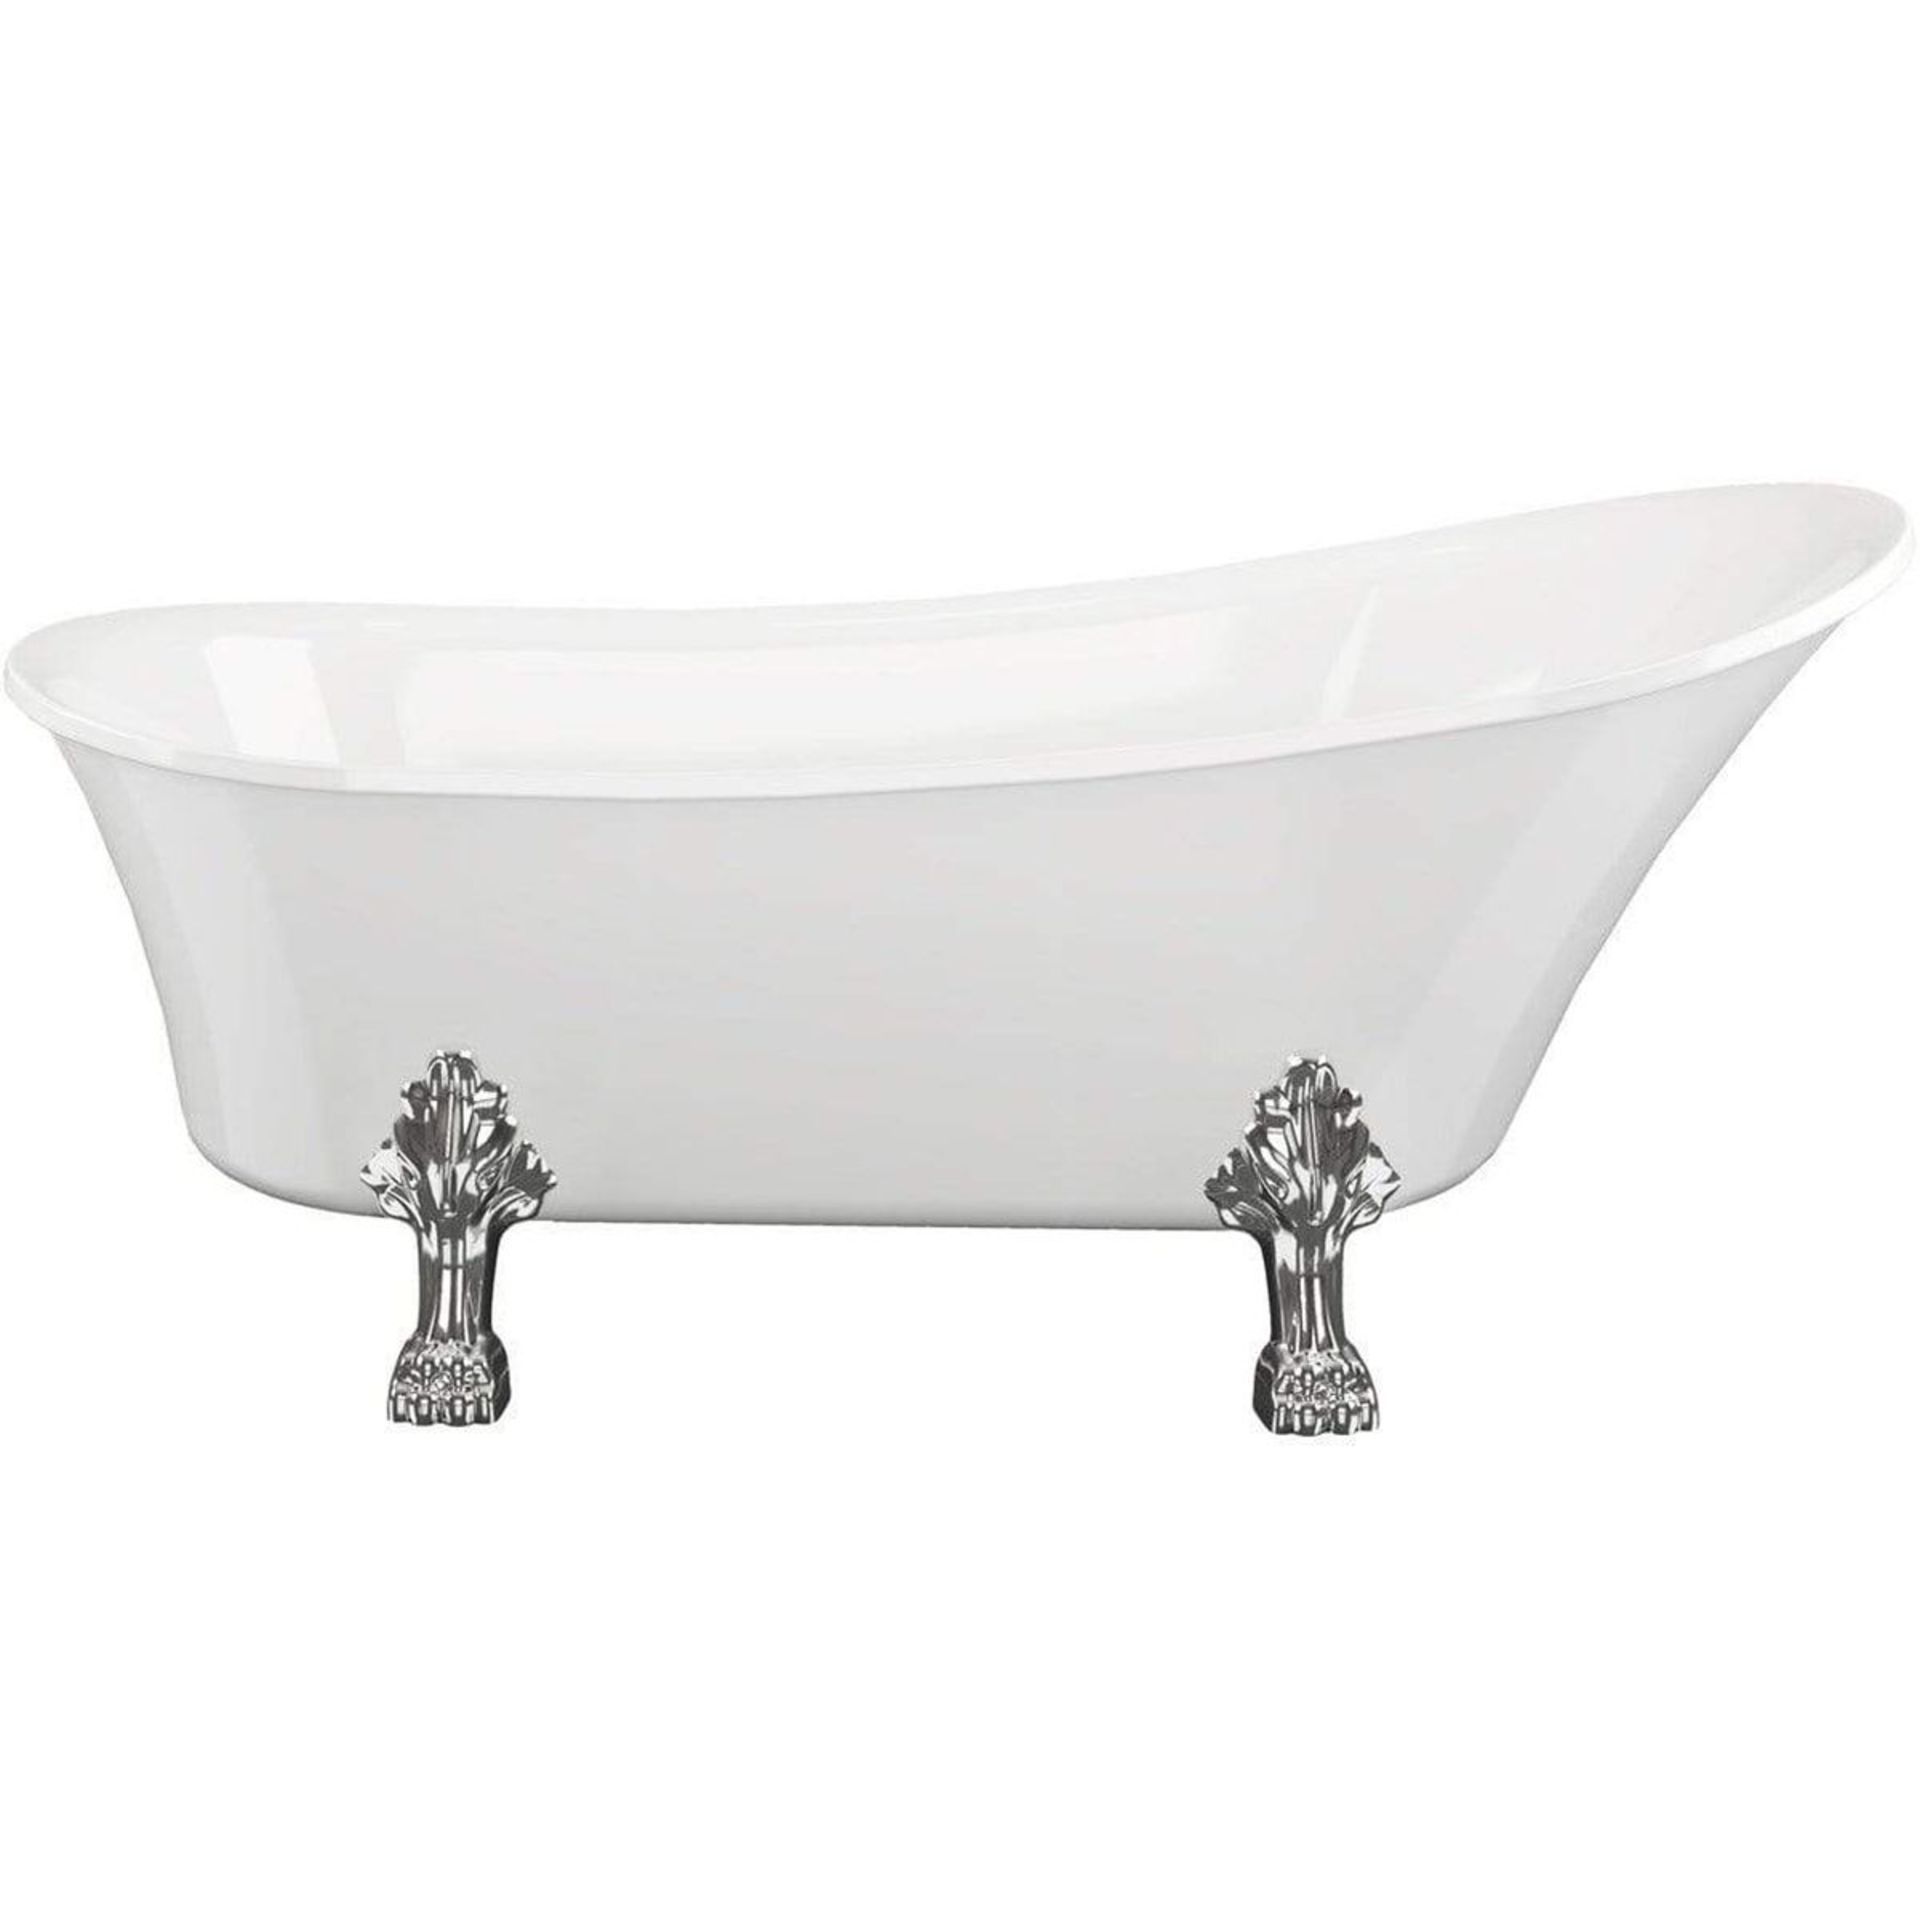 New (K1) 1770x705mm Traditional Slim Roll Top Slipper Bath - Chrome Feet. RRP £999.99.Bath Ma... - Image 2 of 2